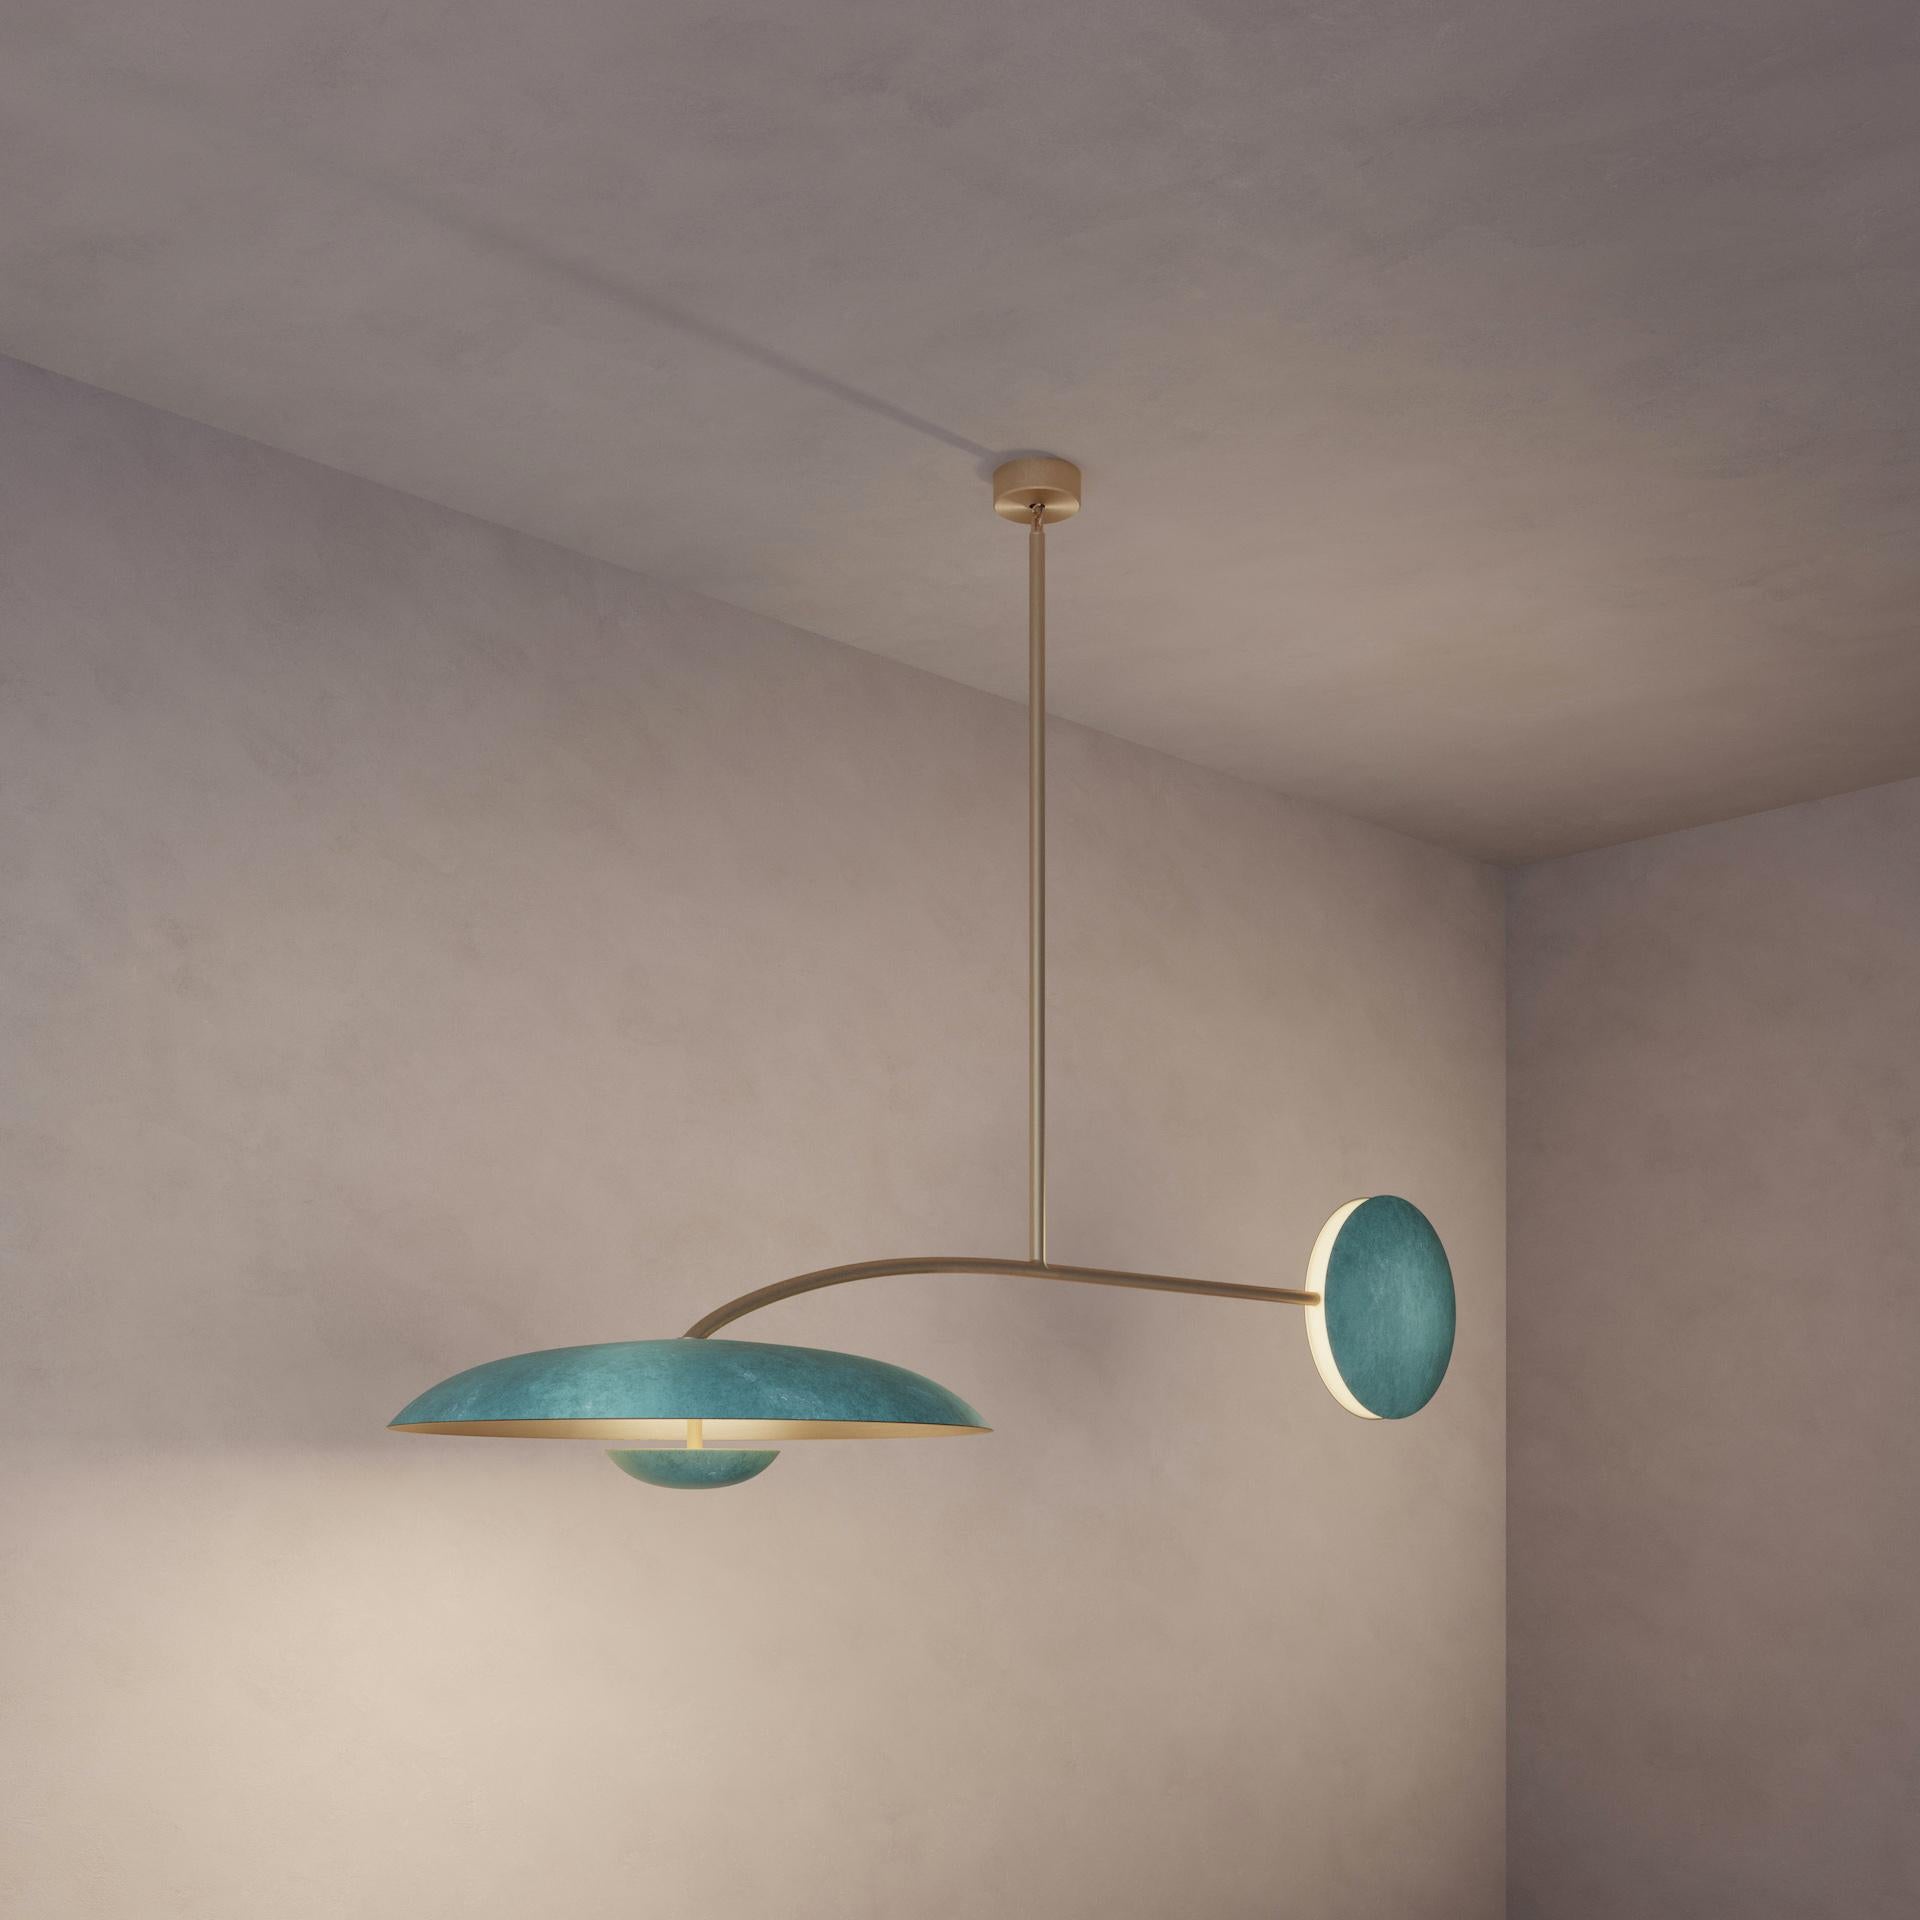 Contemporary Orbit Solo Verdigris Ceiling Light by Atelier001